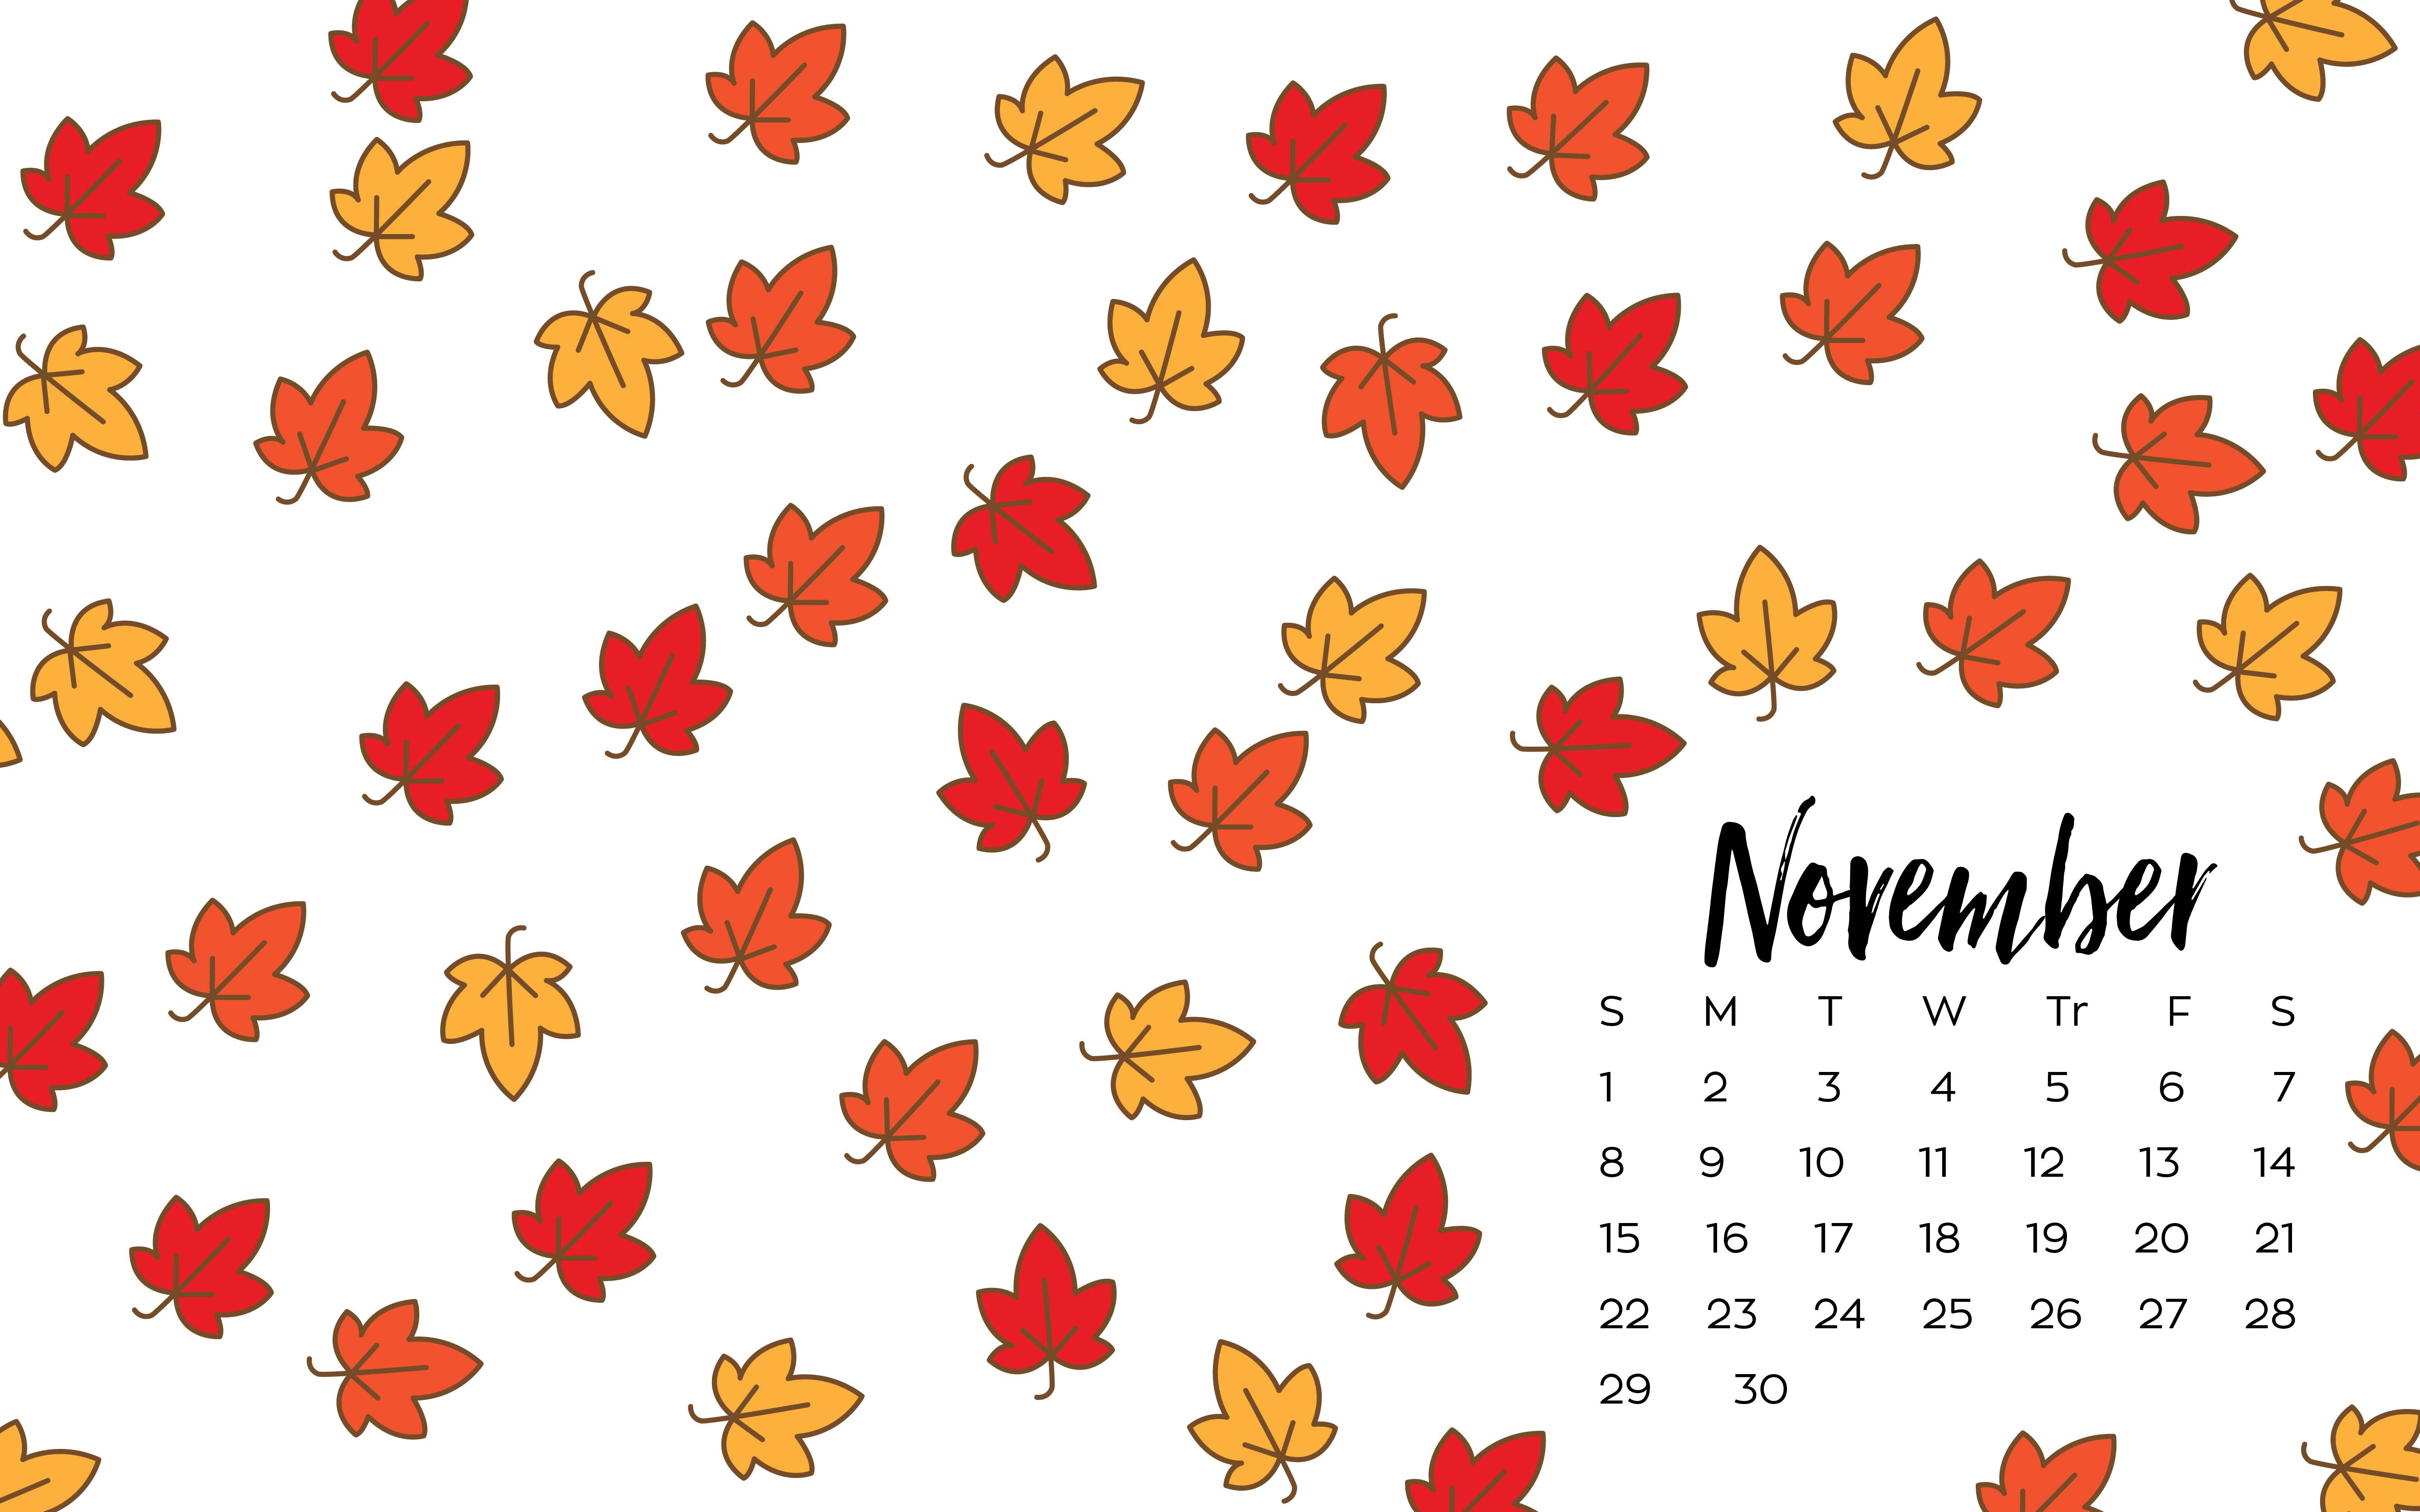 Get your FREE November 2015 Fall Desktop Wallpaper!